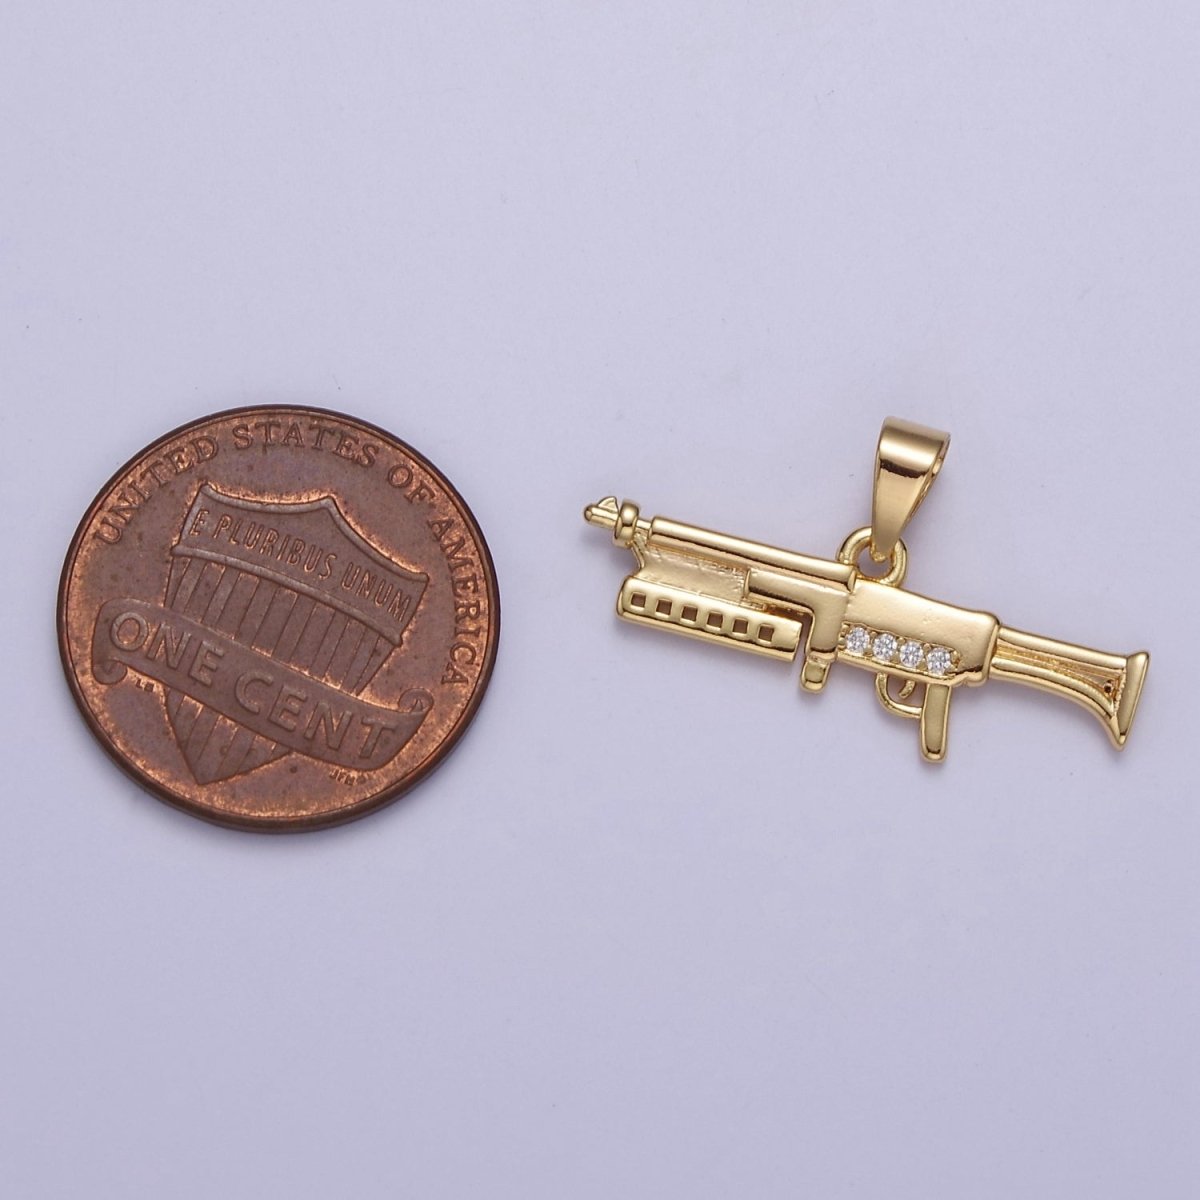 Micro Pave Machine Gun Shape Pendant 16K Gold Filled Gun Charm, Necklace Bracelet Charm Pendant 14x25.2mm J-441 - DLUXCA